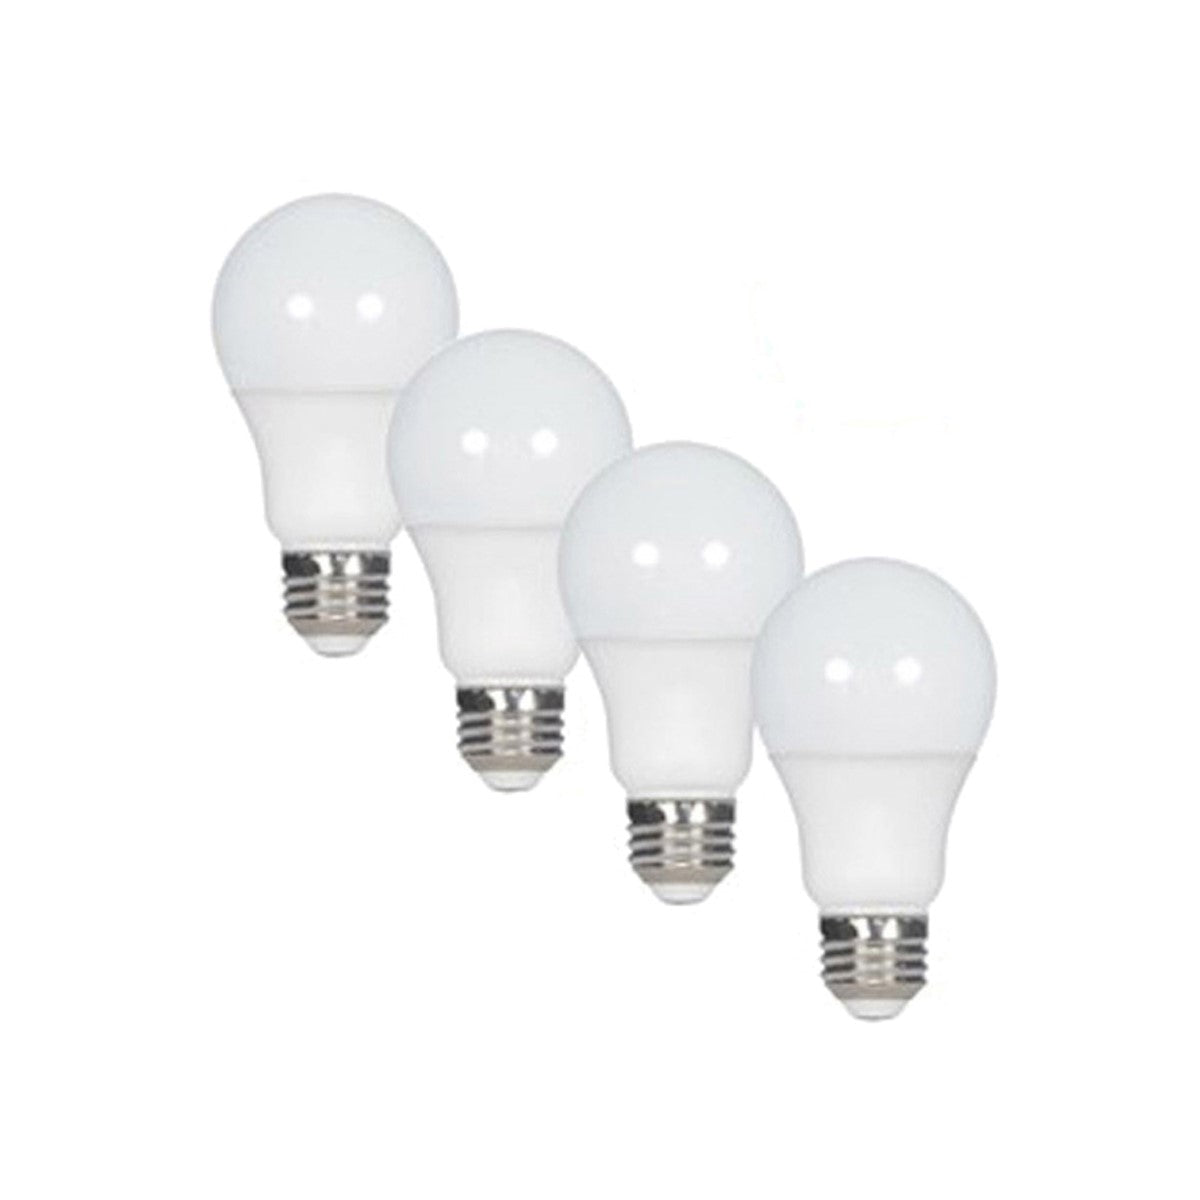 A19 LED Bulb, 75W Equivalent, 13 Watt, 1050 Lumens, 3000K, E26 Medium Base, Frosted Finish, Pack Of 4